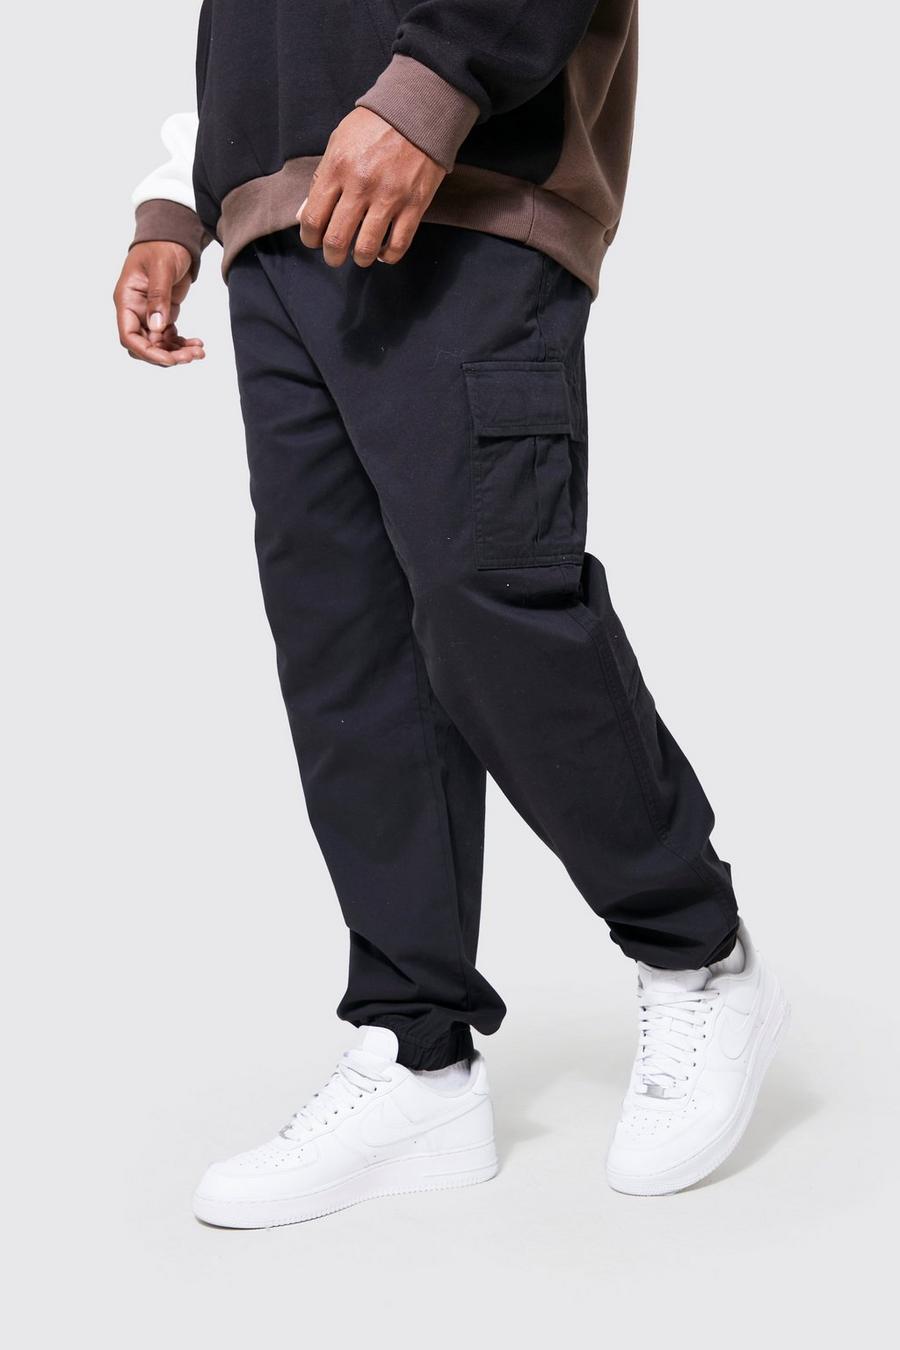 Pantalón Plus cargo ajustado, Black negro